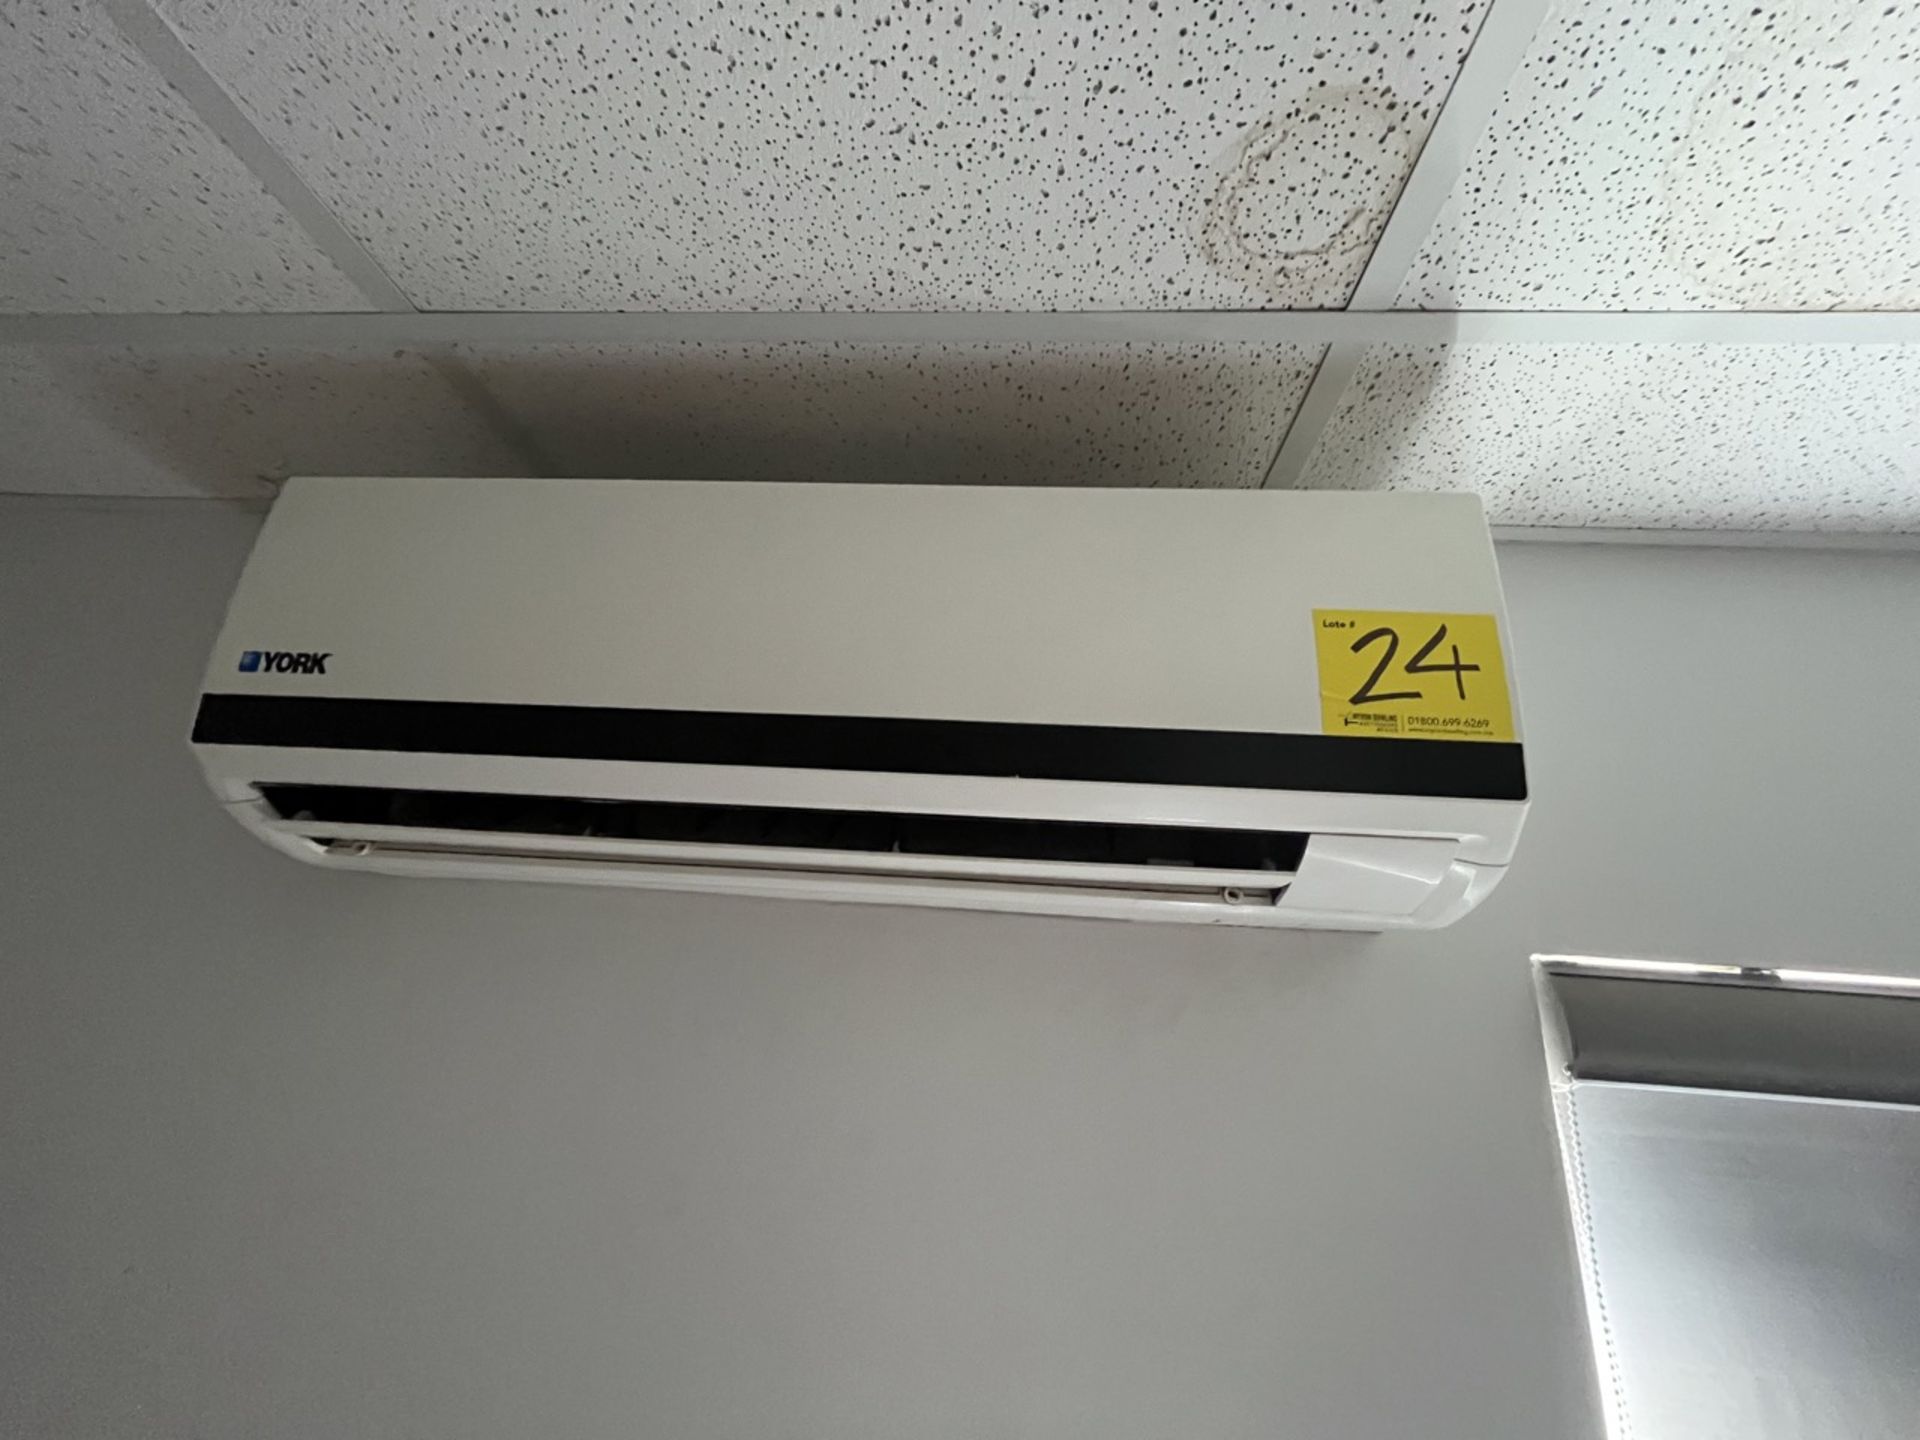 York minisplit air conditioner with control, Model YSEA12FS-ADK, 100001010140290127, Series, 220 Vo